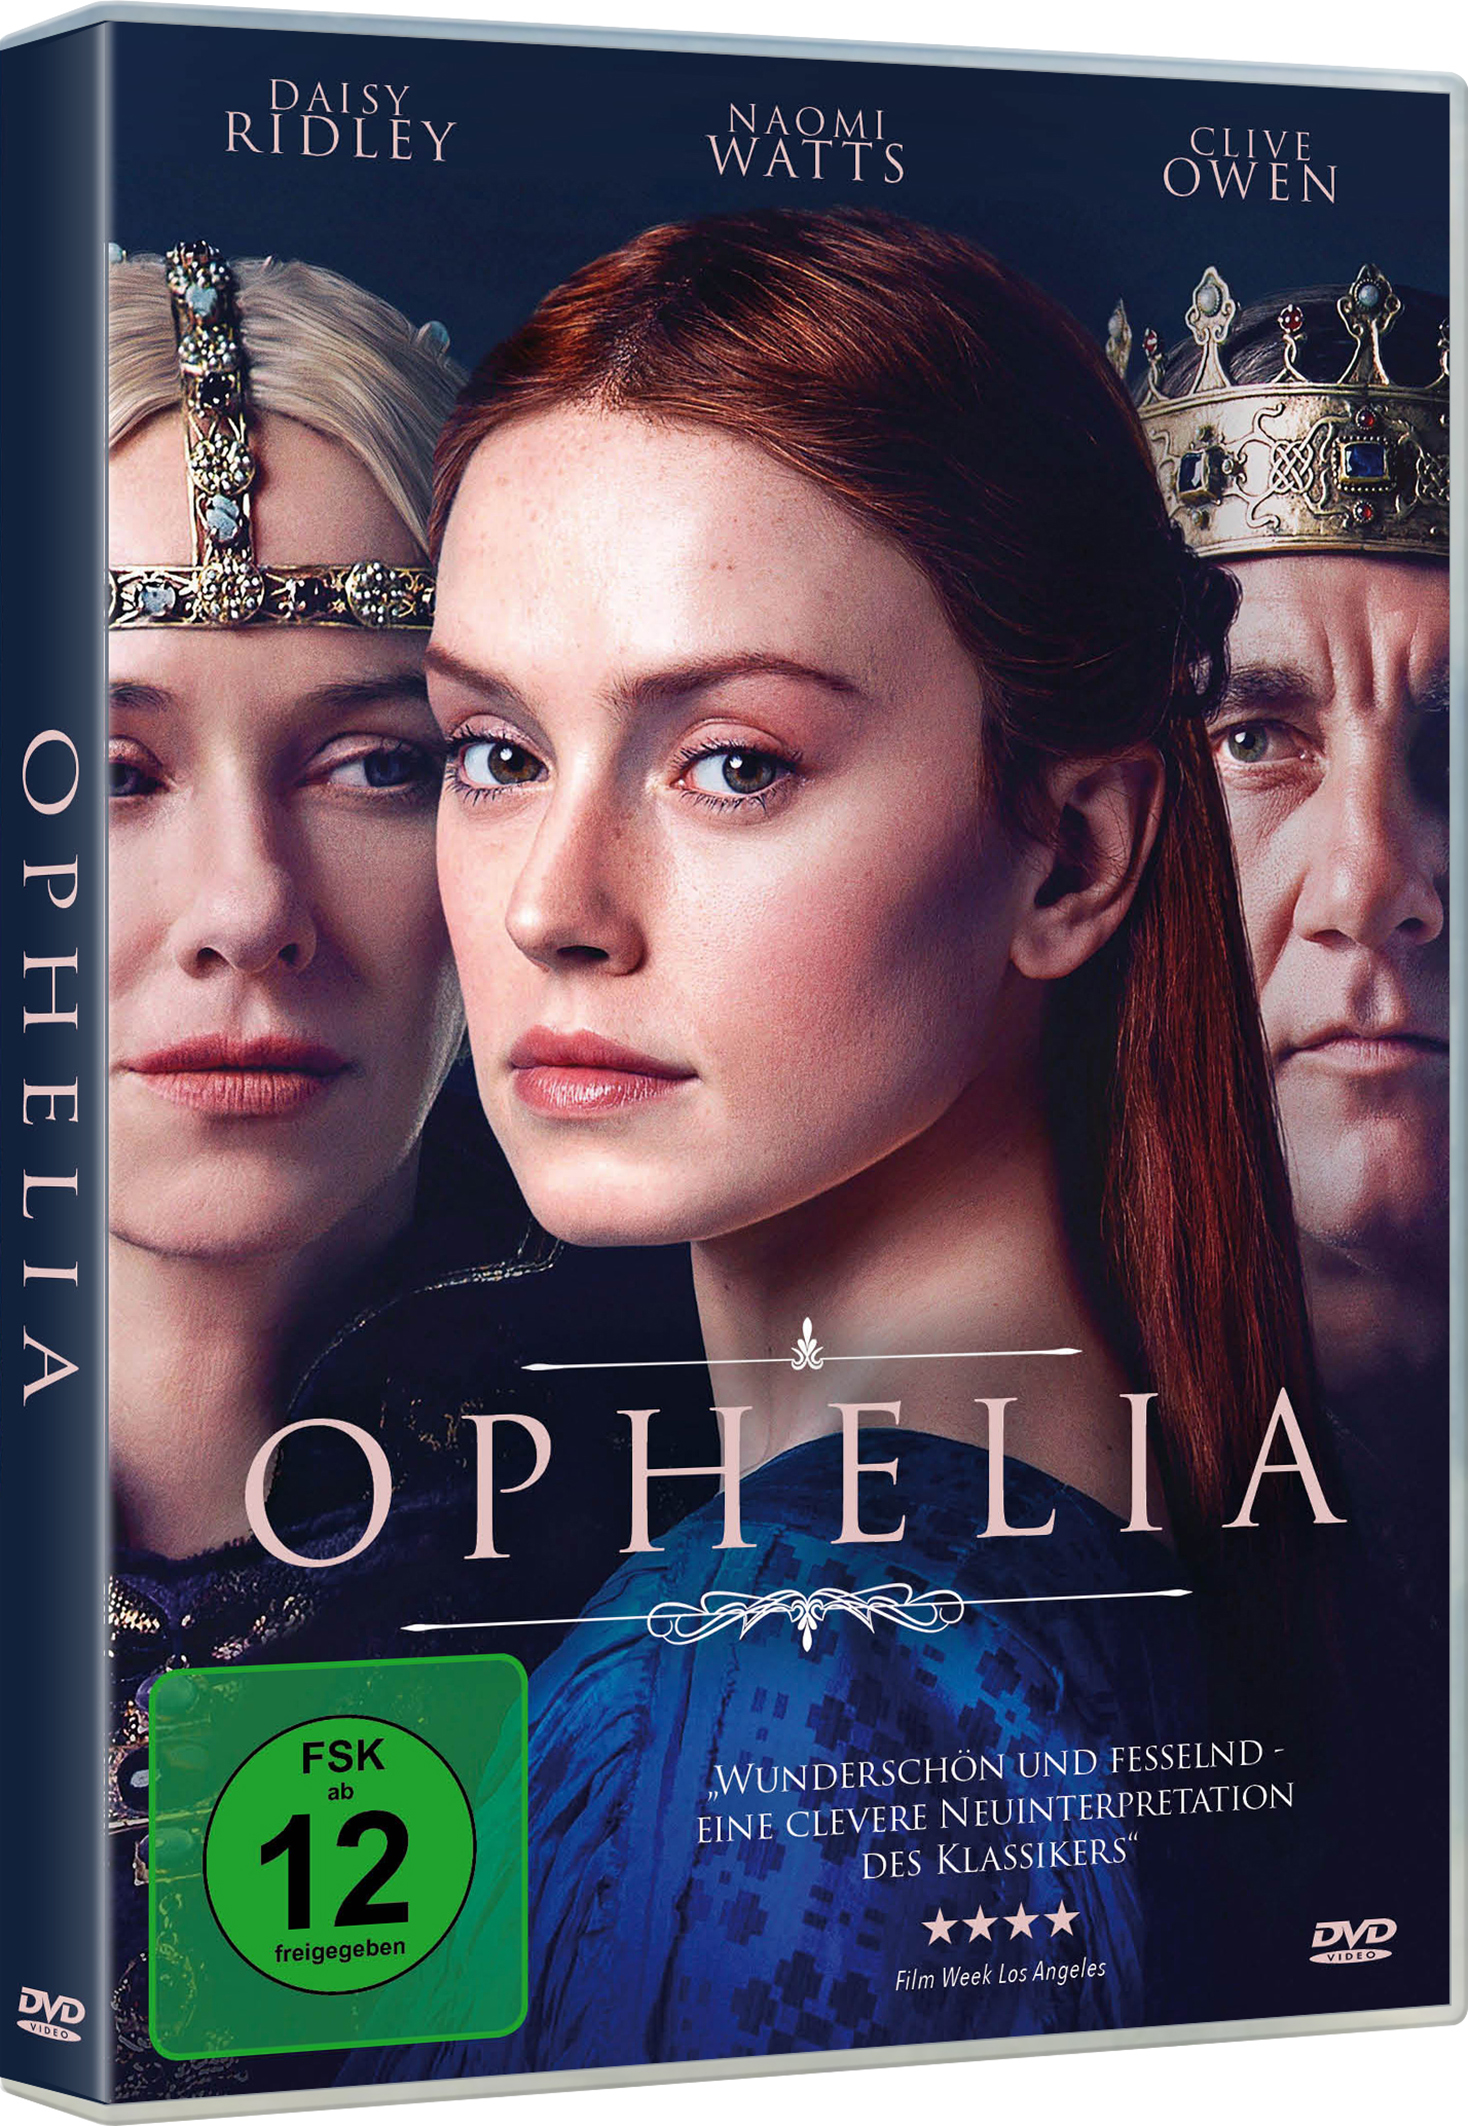 Ophelia (DVD)  Image 2